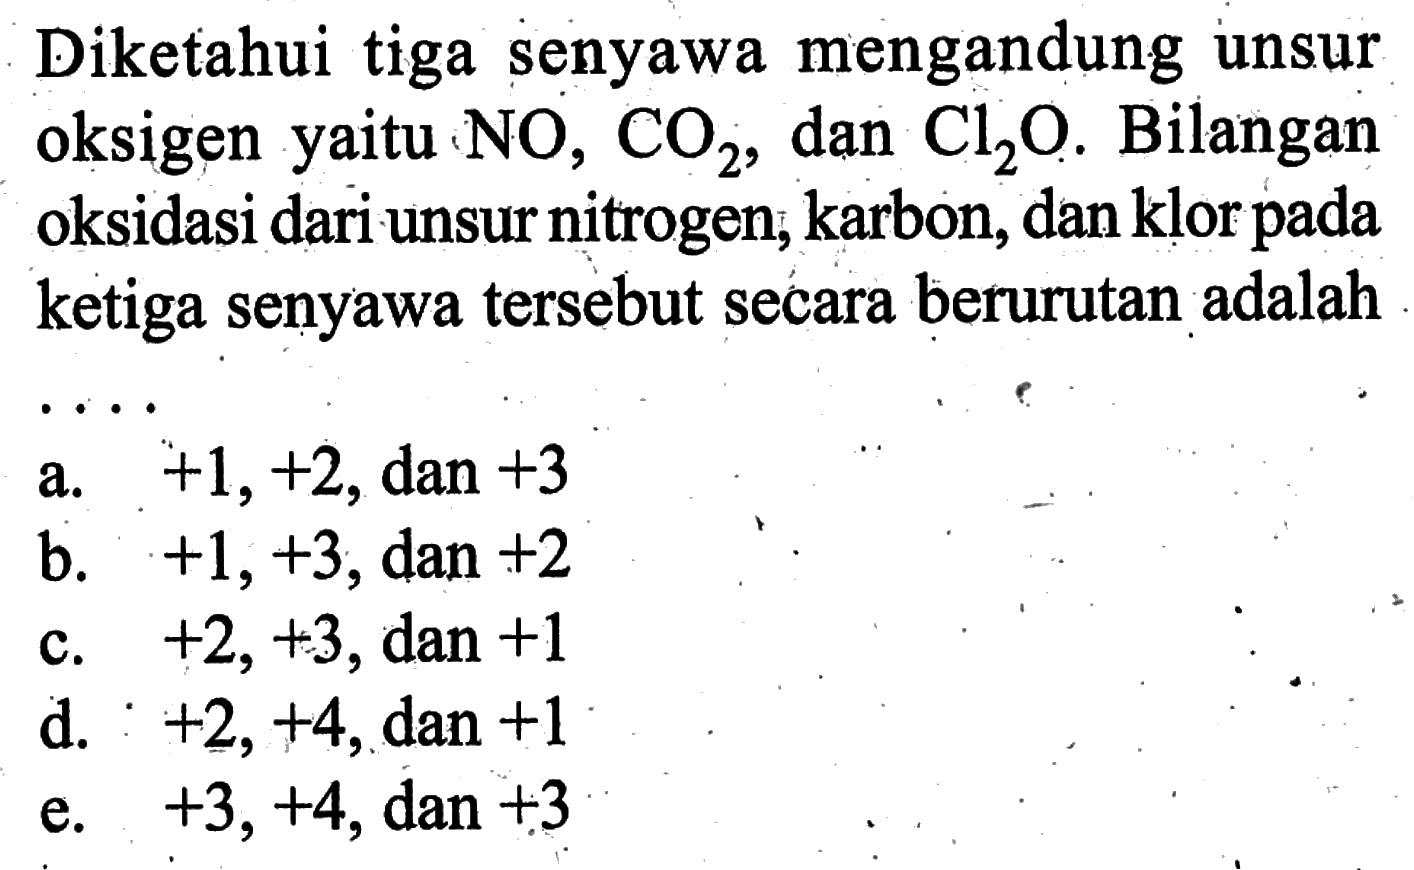 Diketahui tiga senyawa mengandung unsur oksigen yaitu NO, CO2, dan Cl2O. Bilangan oksidasi dari unsur nitrogen, karbon, dan klor pada ketiga senyawa tersebut secara berurutan adalah...